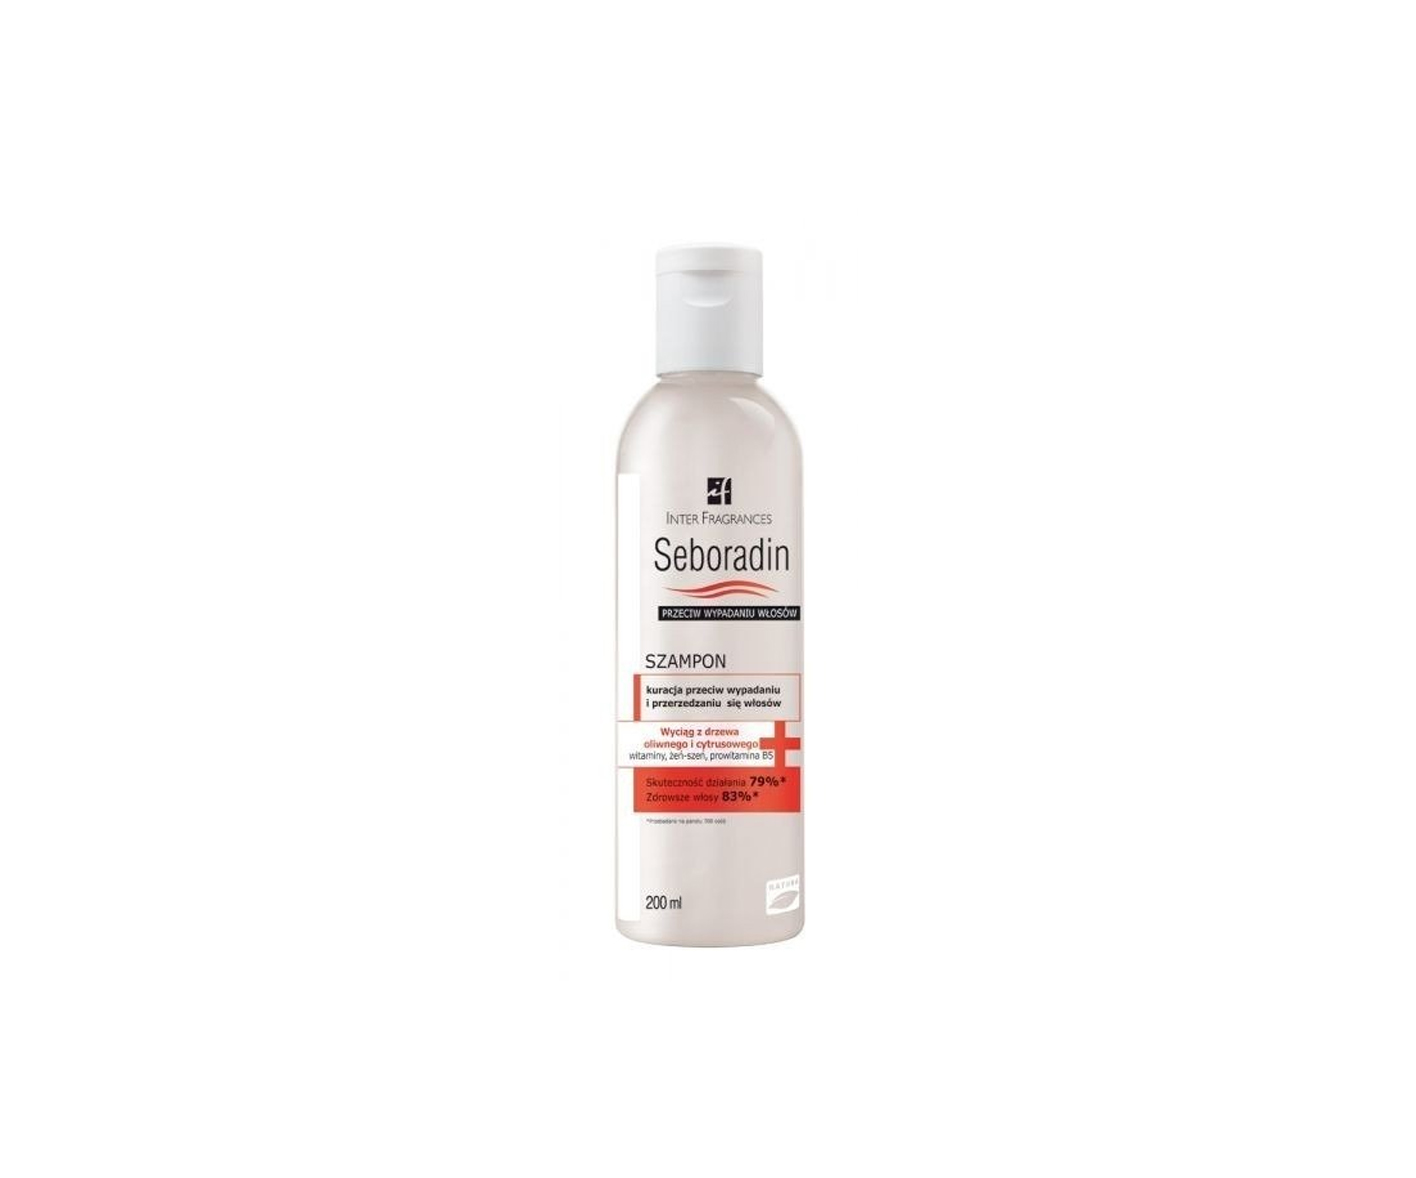 Seboradin, shampoo - treatment against hair loss and thinning